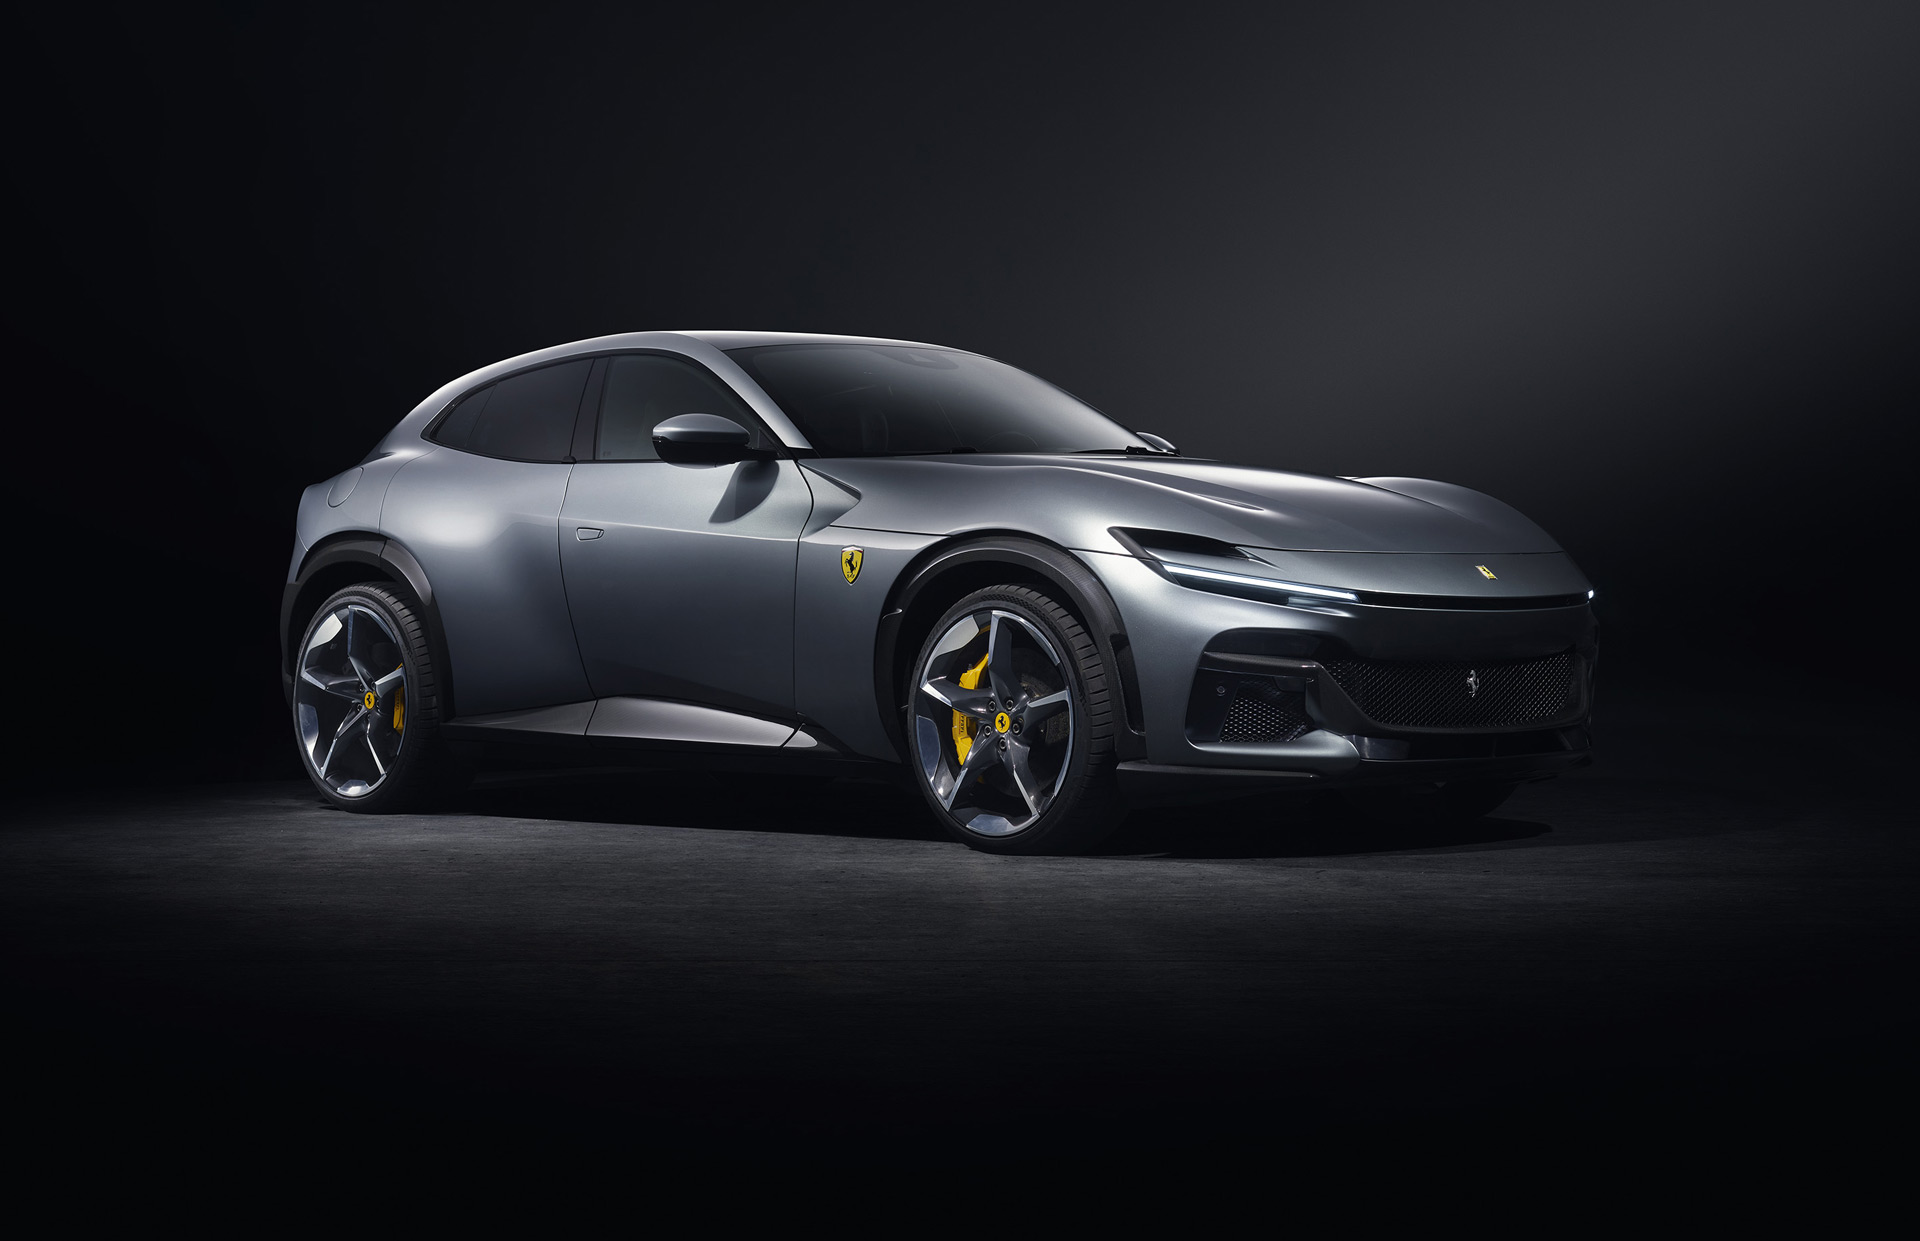 Ferrari Purosangue revealed as V12powered SUV with 715 hp, suicide doors